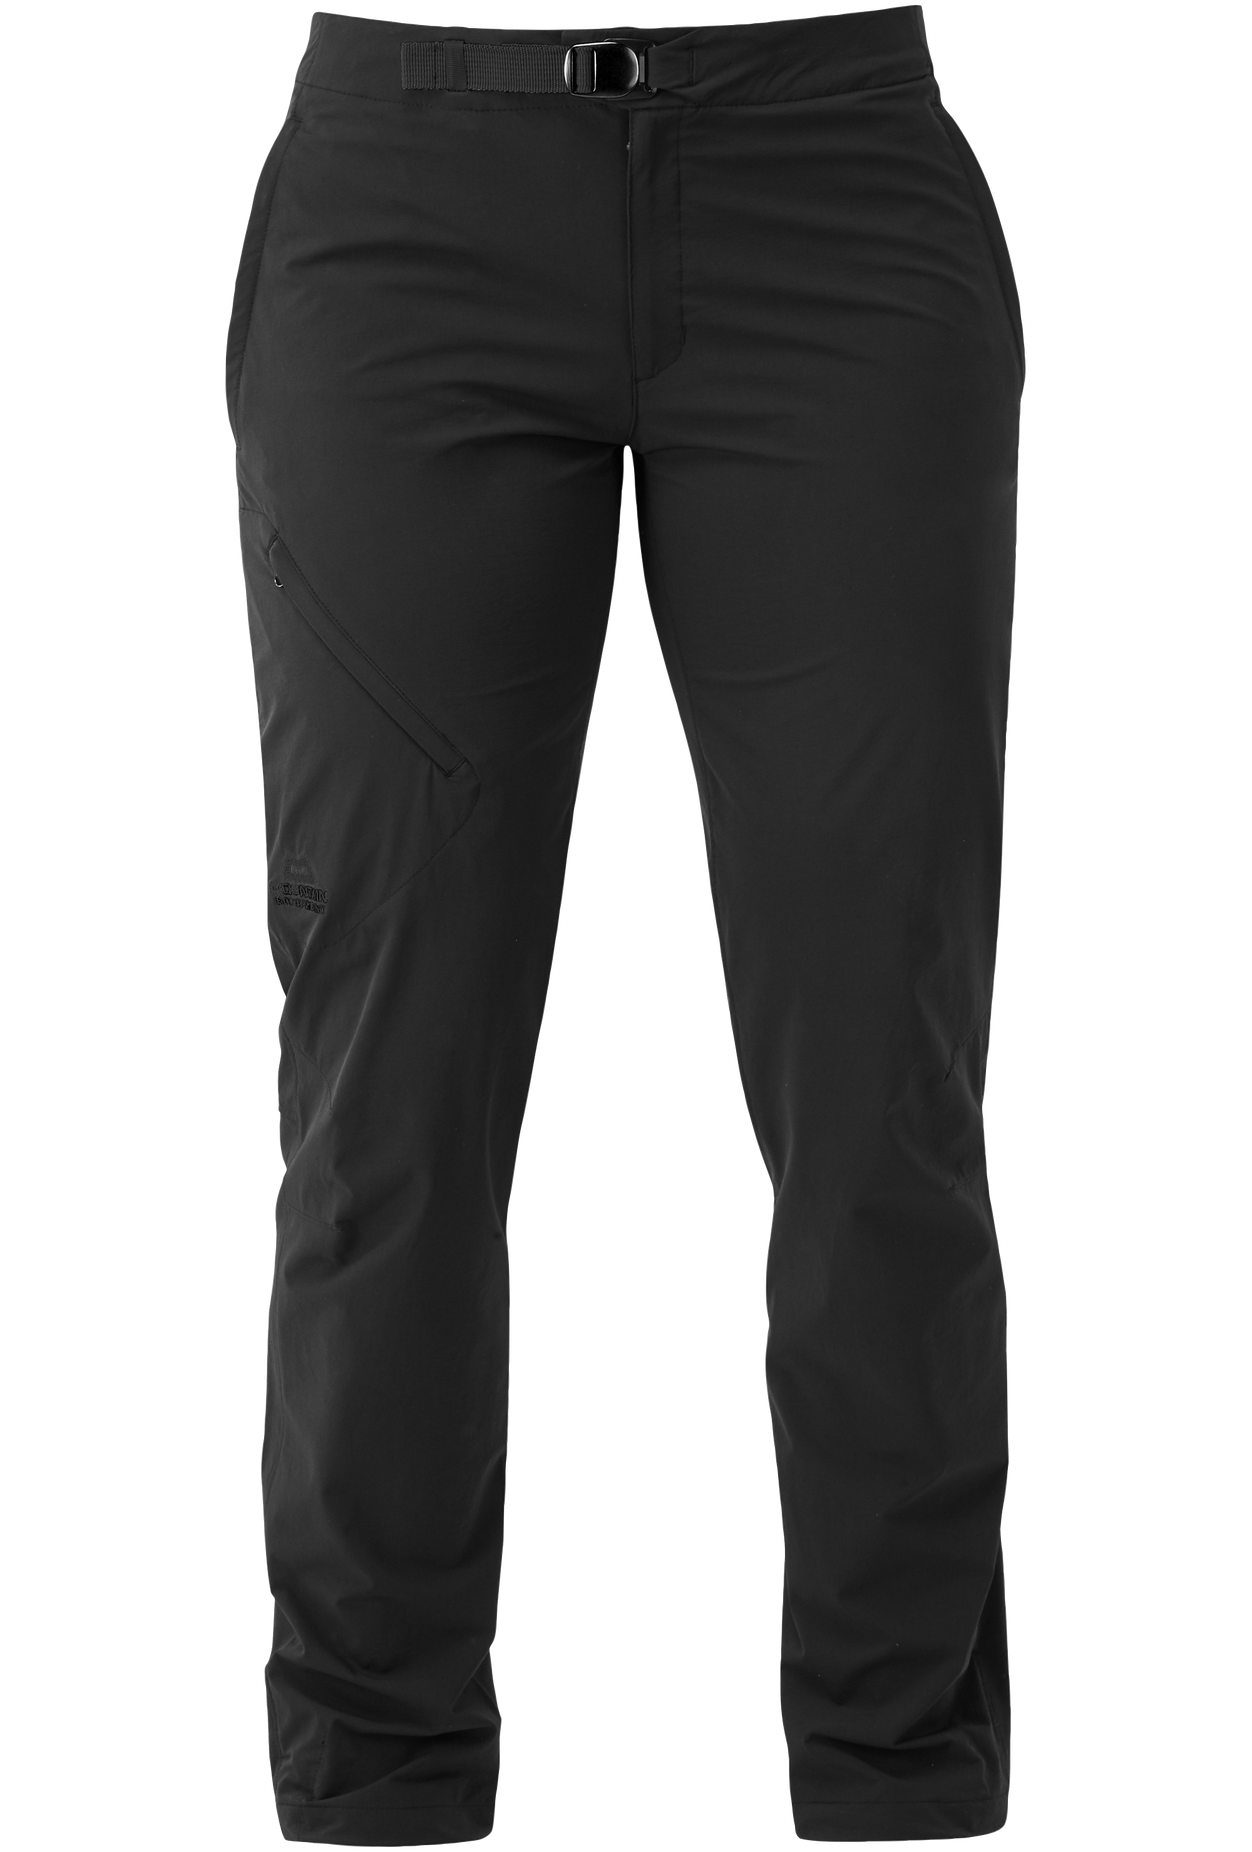 Mountain Equipment dámské softshellové kalhoty Comici Wmns Pant Barva: black/black, Velikost: 8/XS